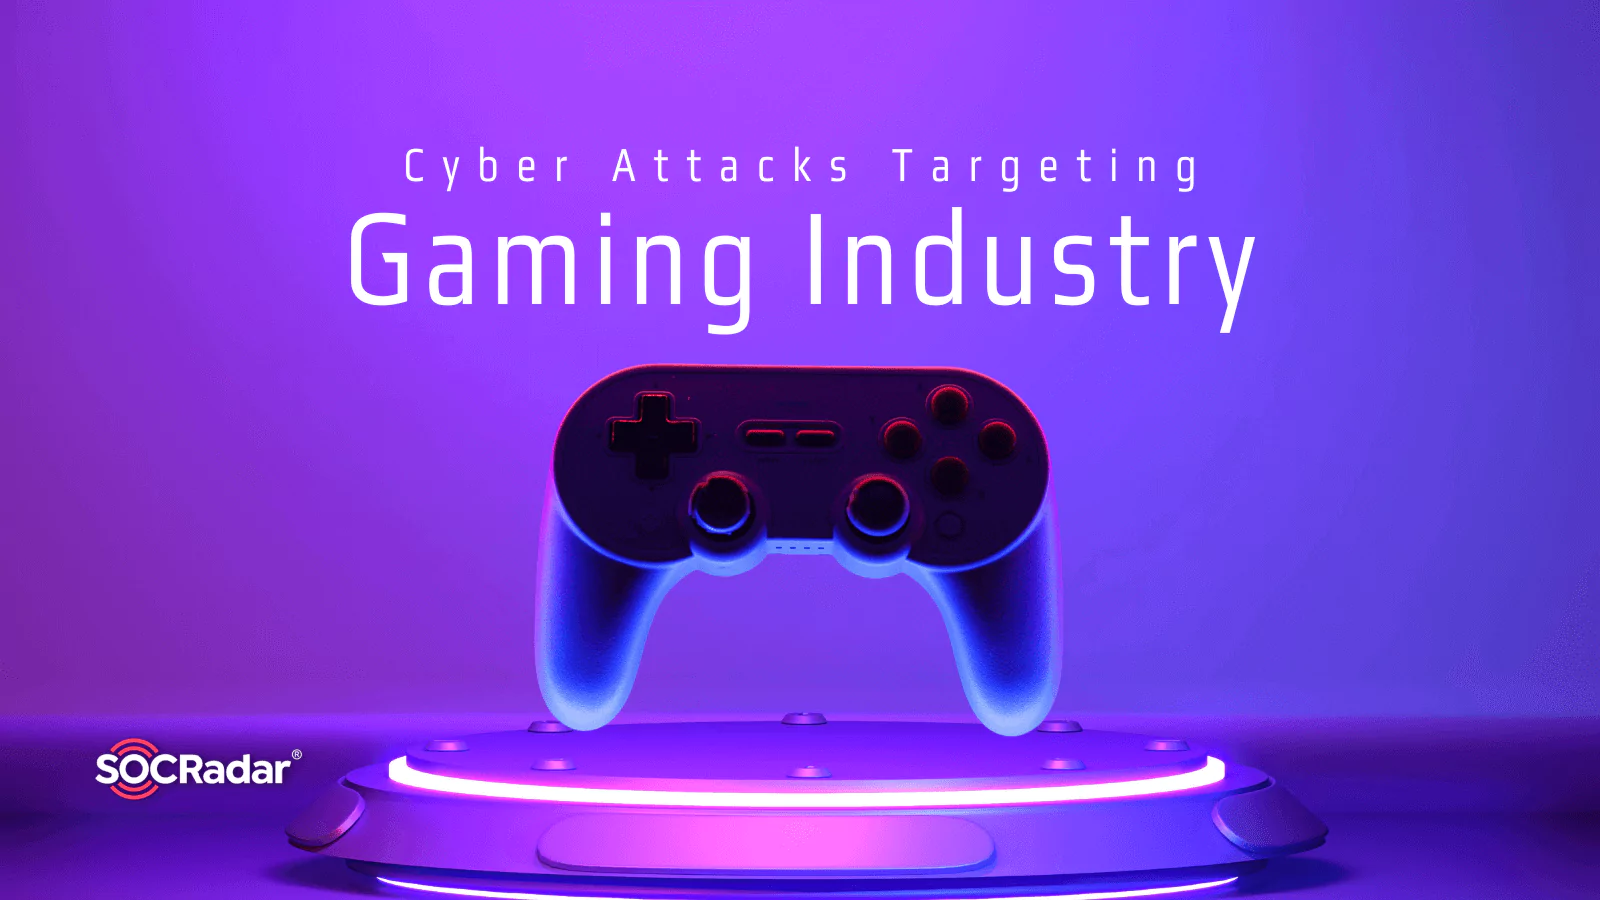 SOCRadar® Cyber Intelligence Inc. | Increasing Cyberattacks Targeting the Gaming Industry in 2022